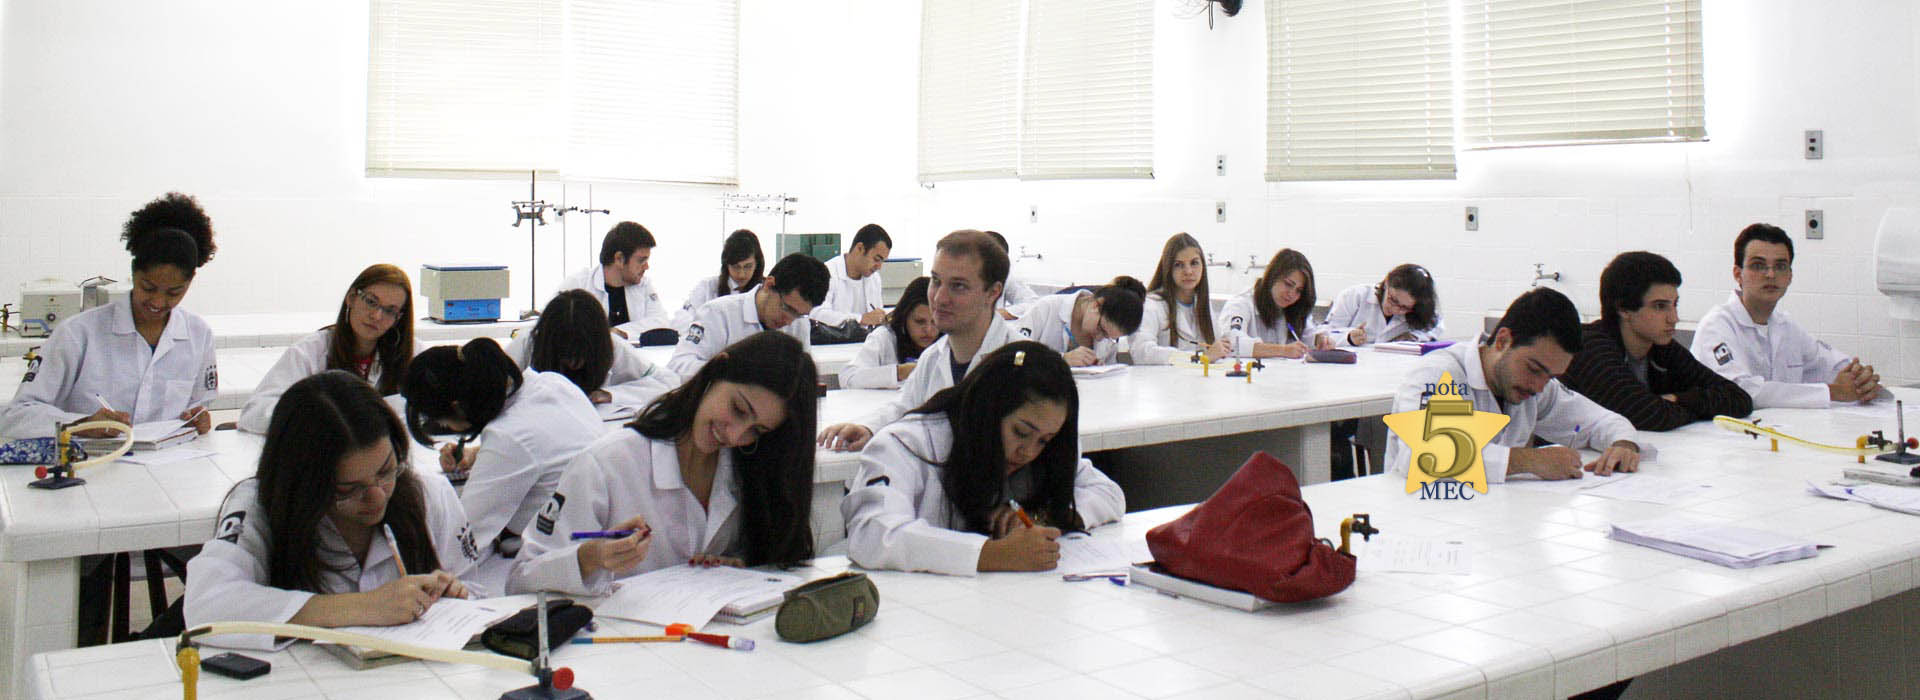 Diversos alunos vestidos de jalecos brancos sentados escrevendo.